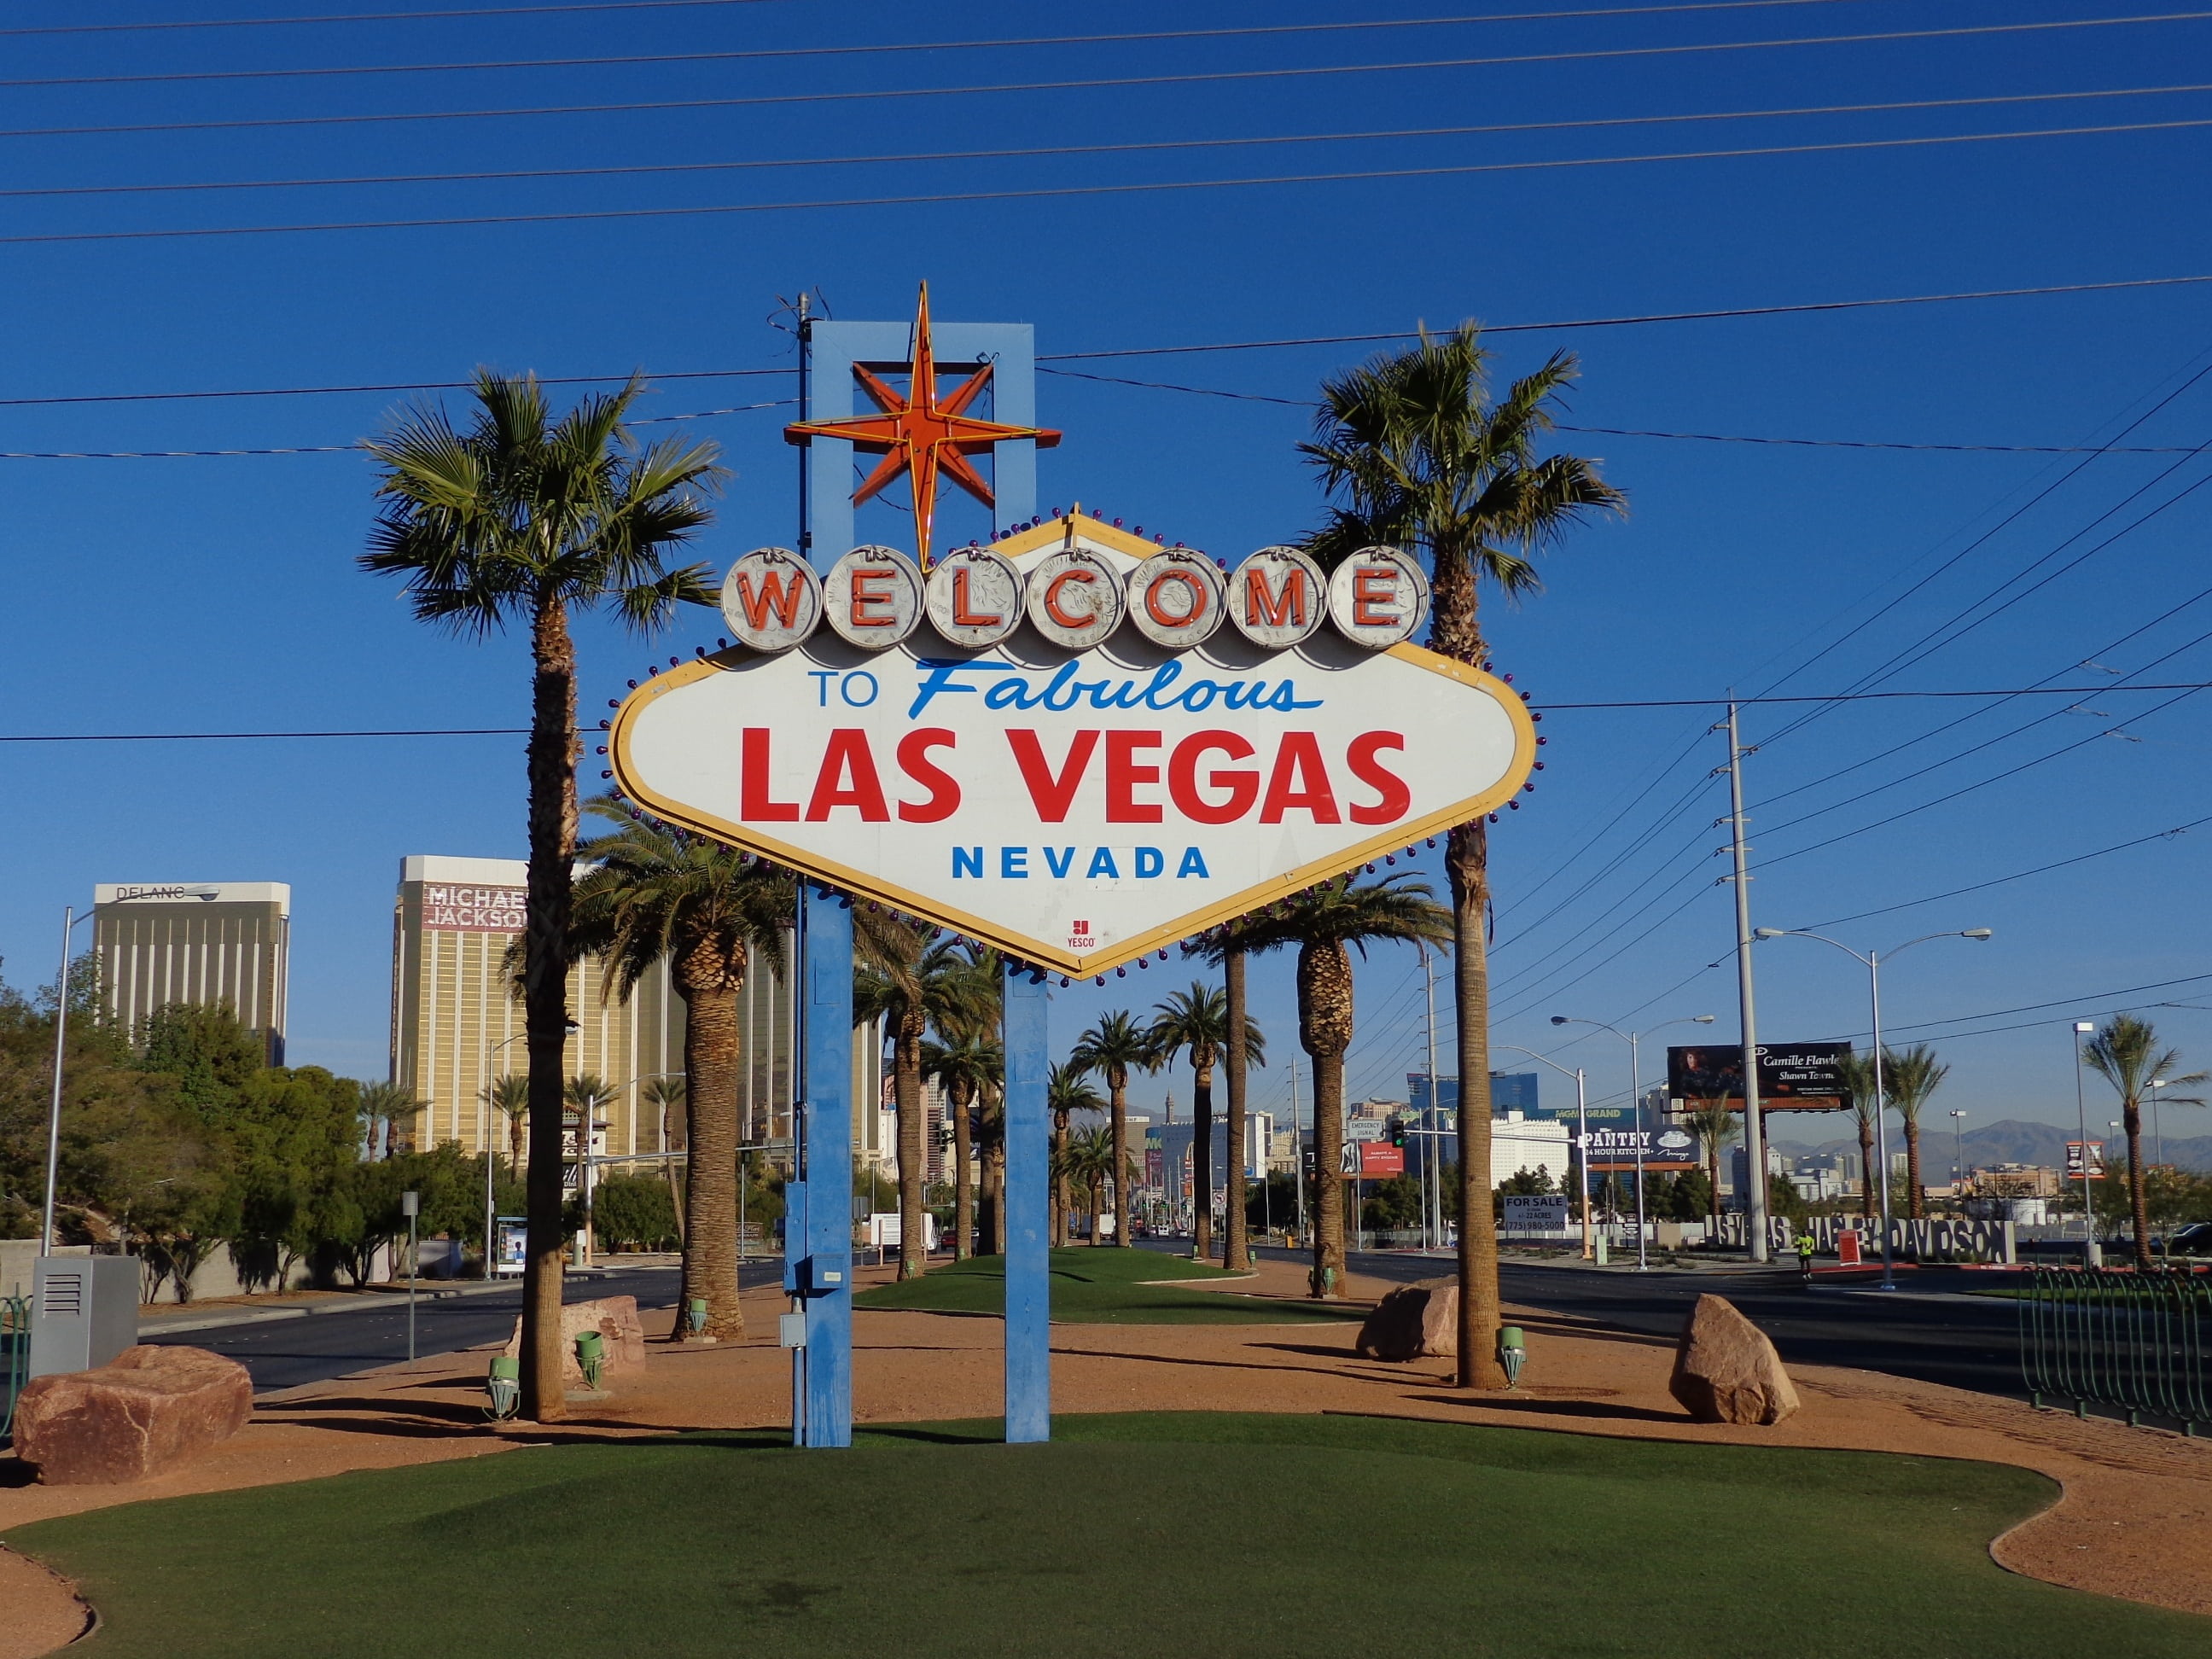 Fabulour Las Vegas, sign, las vegas sign, welcome sign, road